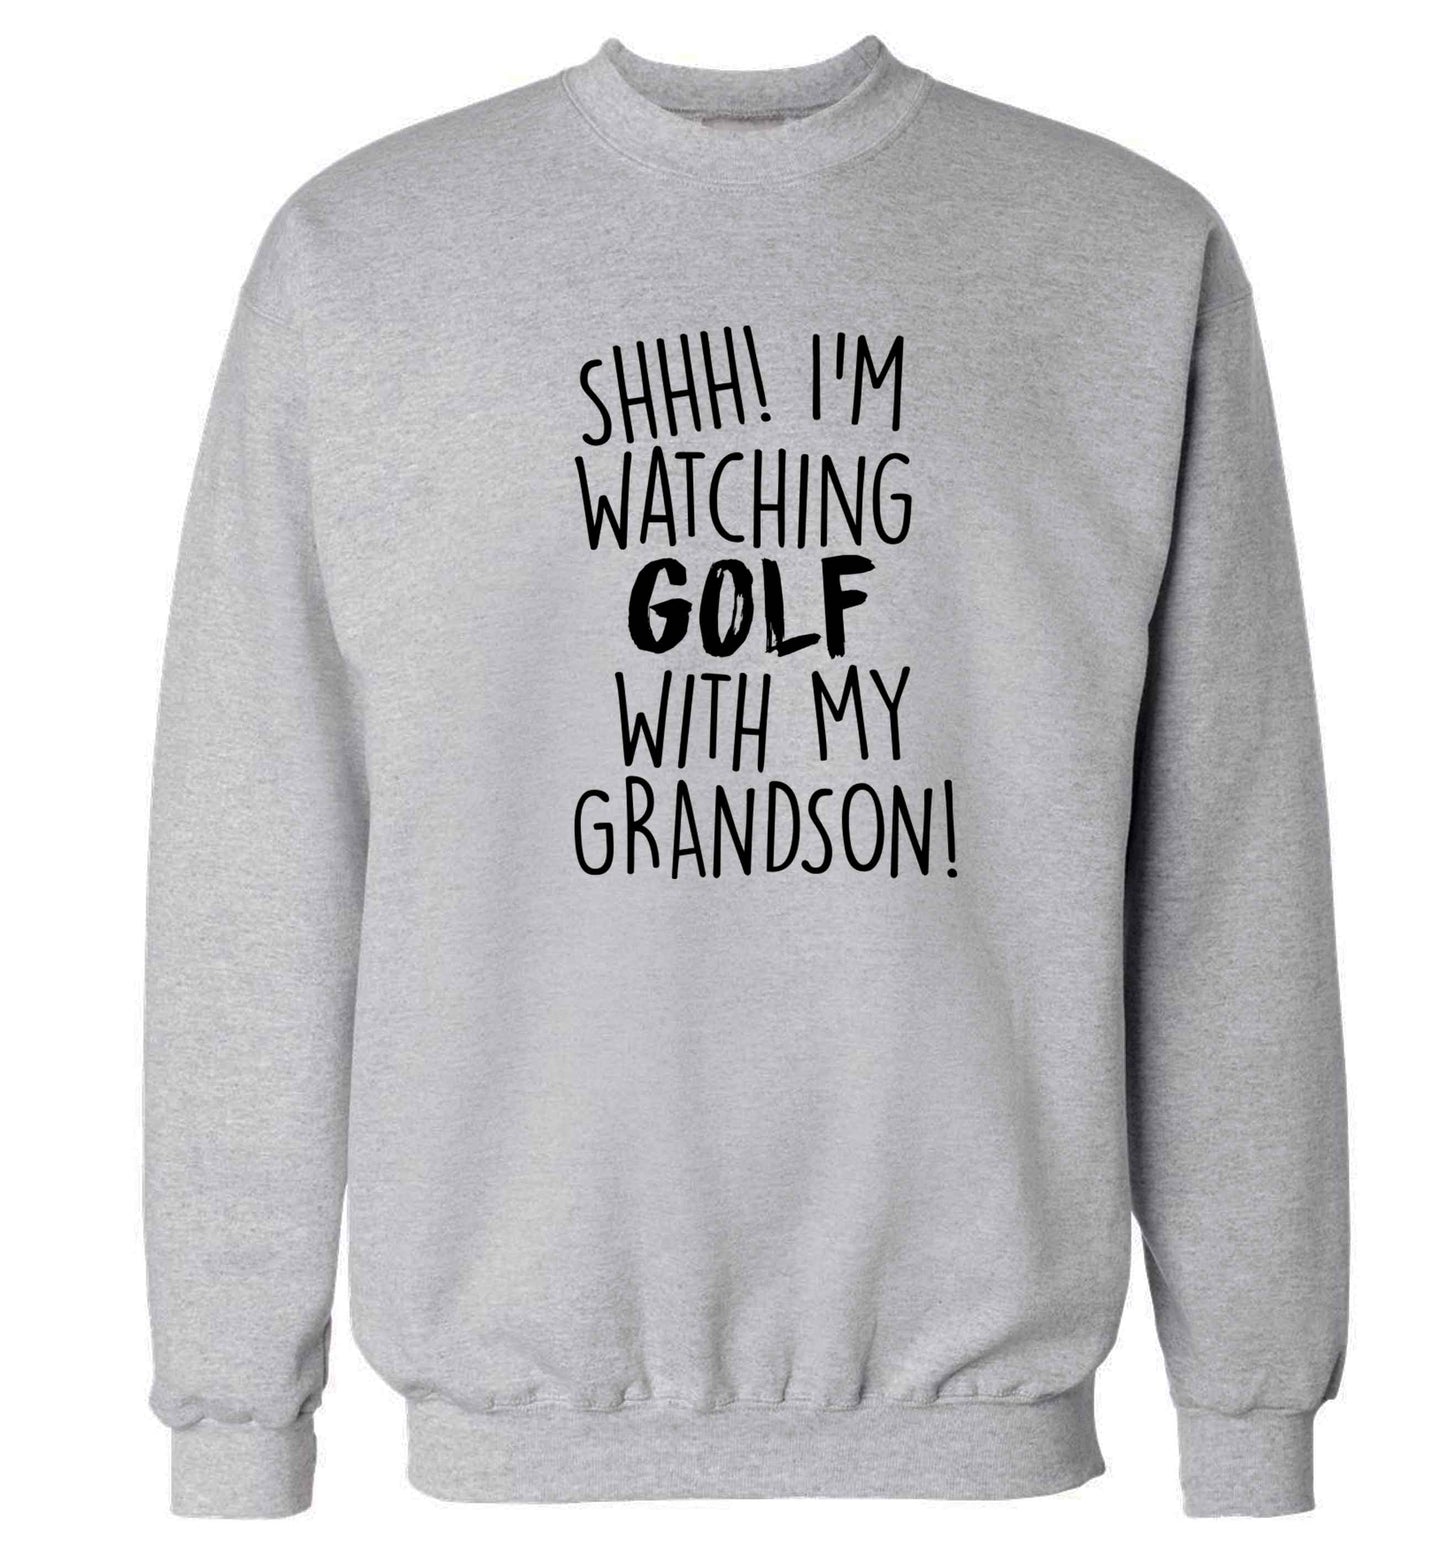 Shh I'm watching golf with my grandsonAdult's unisex grey Sweater 2XL